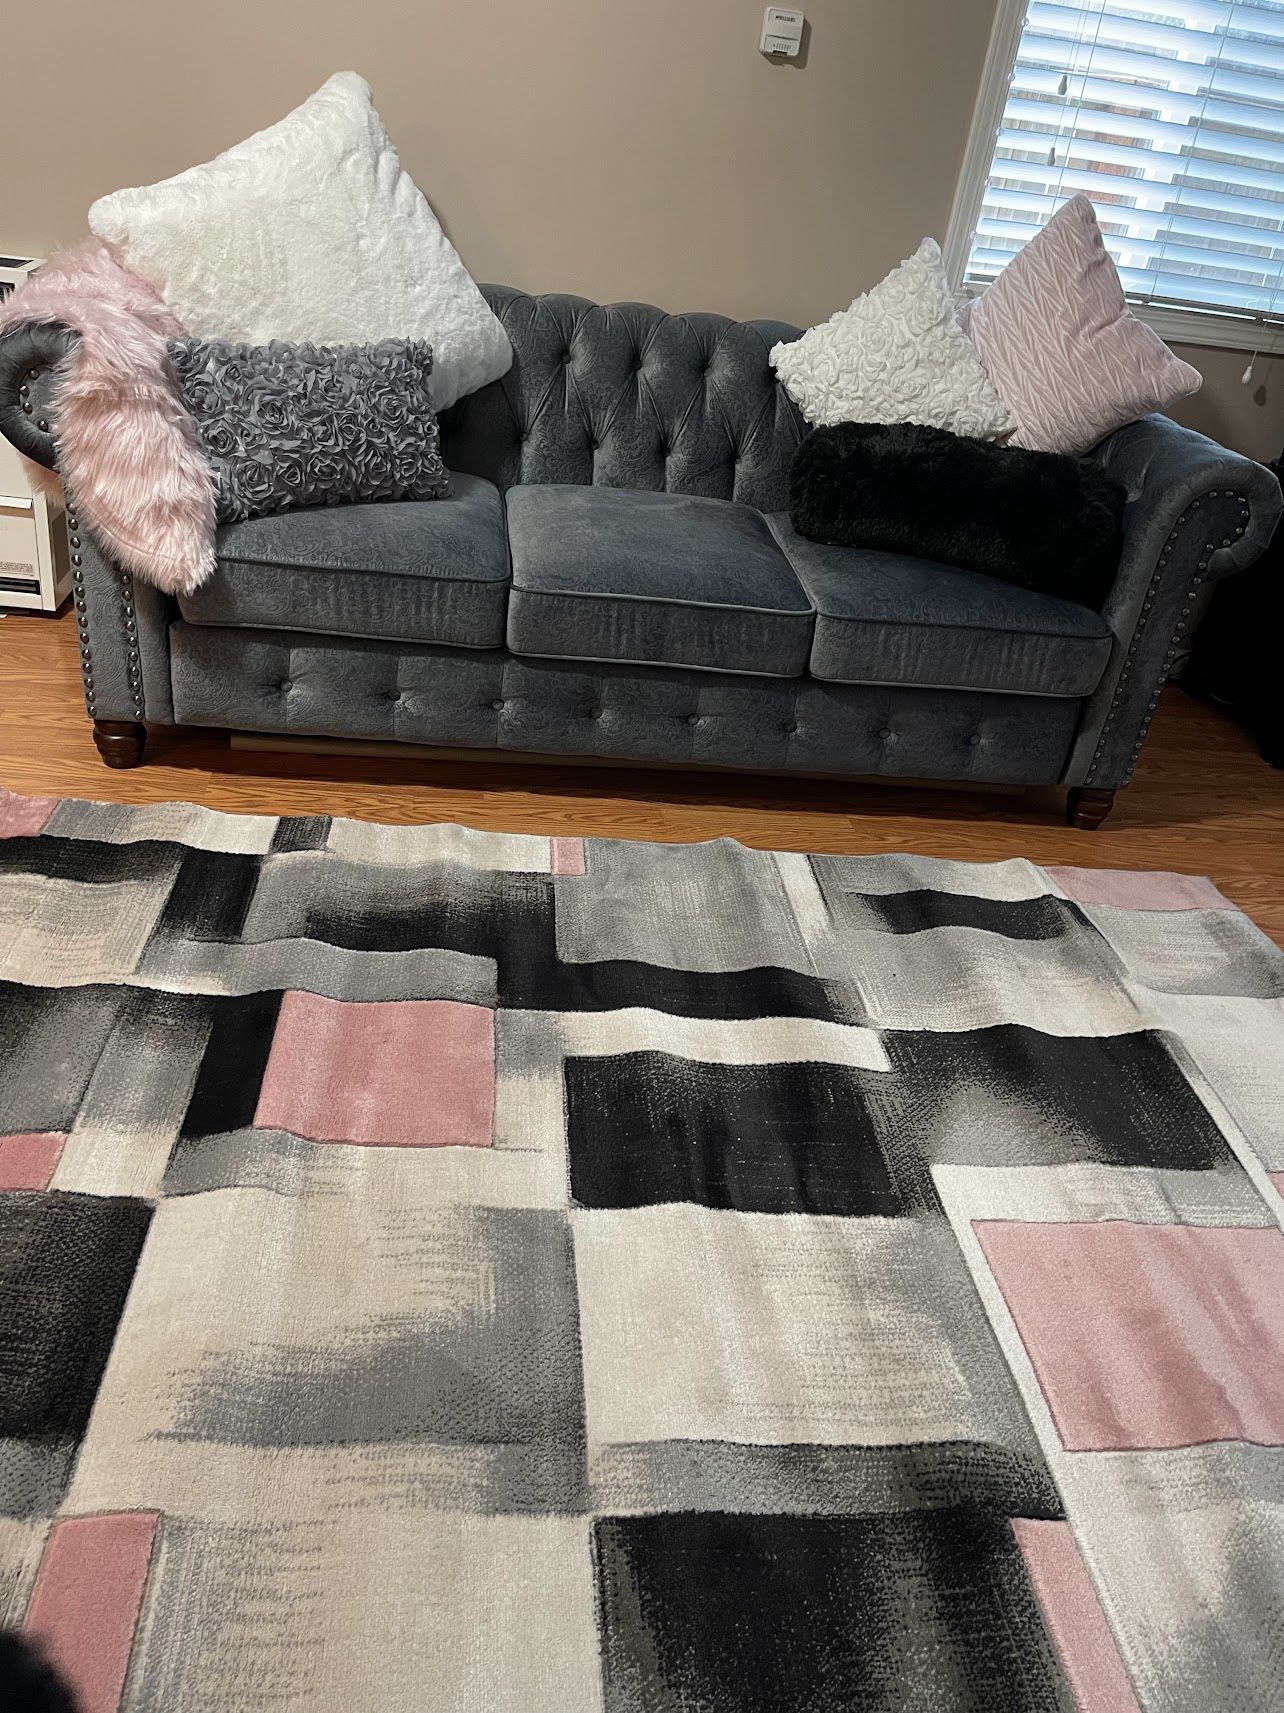 NEW Couch - velvet, floral design in Gray